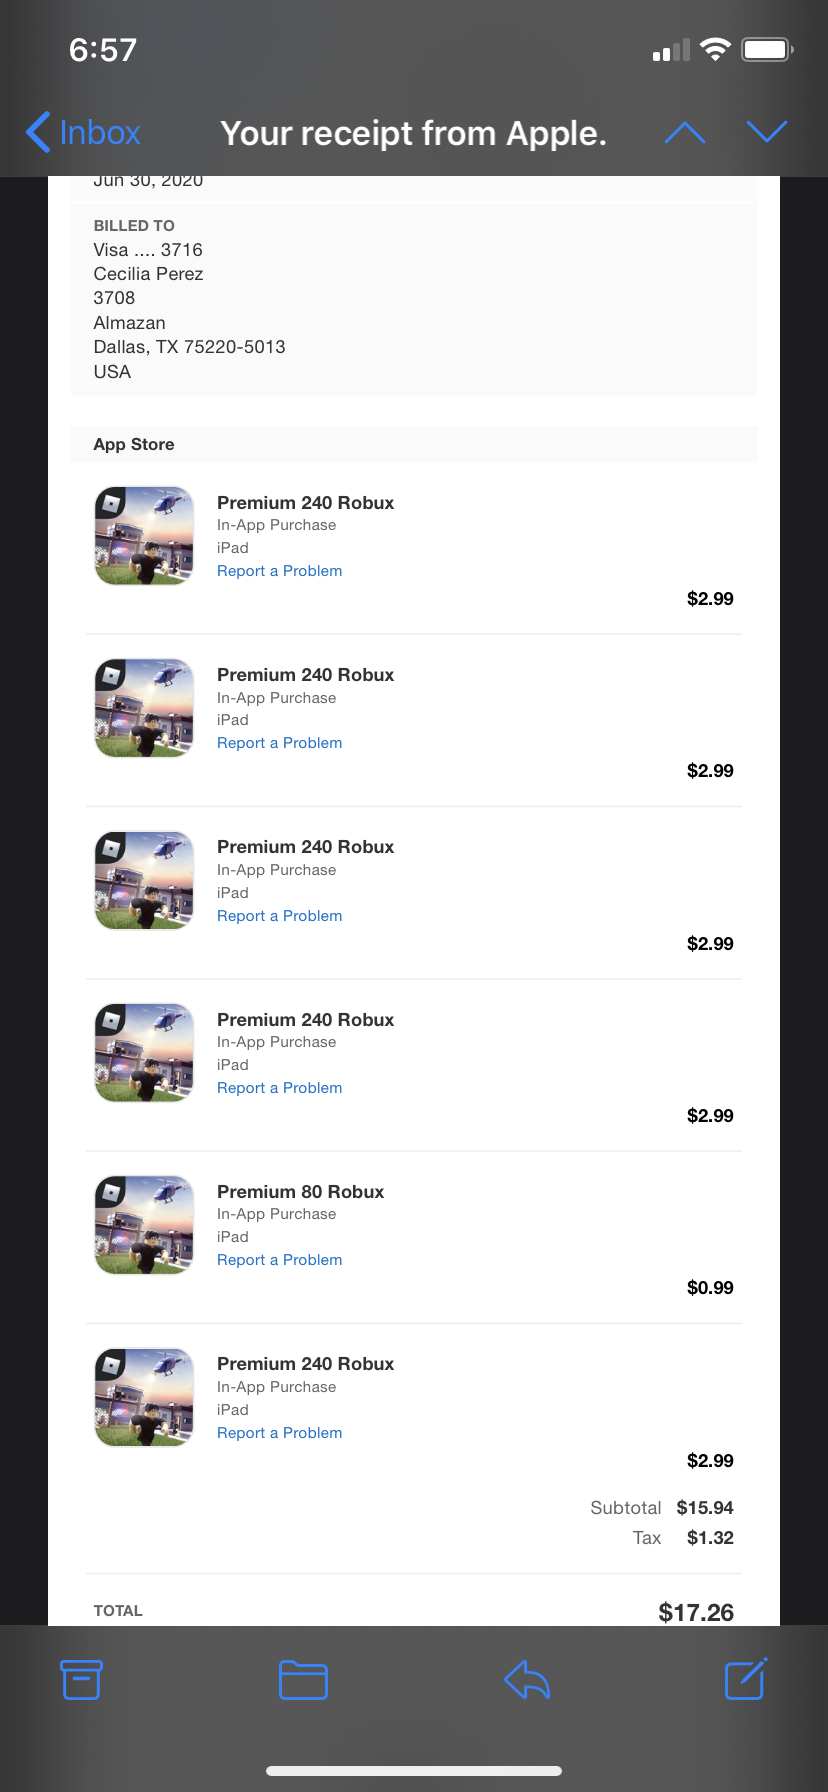 Unarhorized Purchases Apple Community - buy 80 robux on ipad